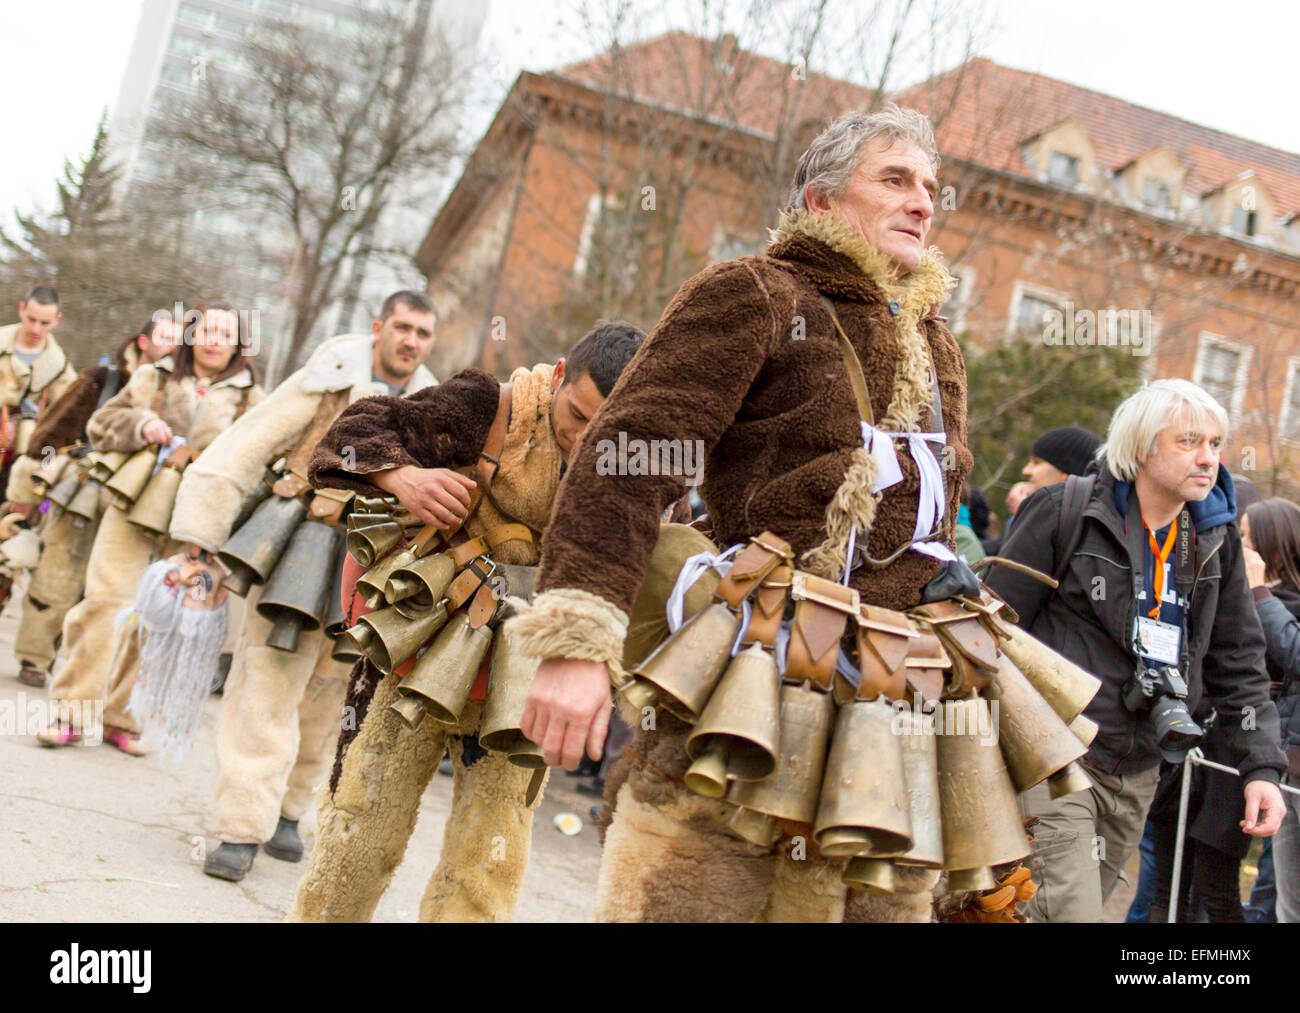 Pernik, Bulgaria - January 31, 2015: Participants are participating in the International Festival of Masquerade Games Surva. The Stock Photo